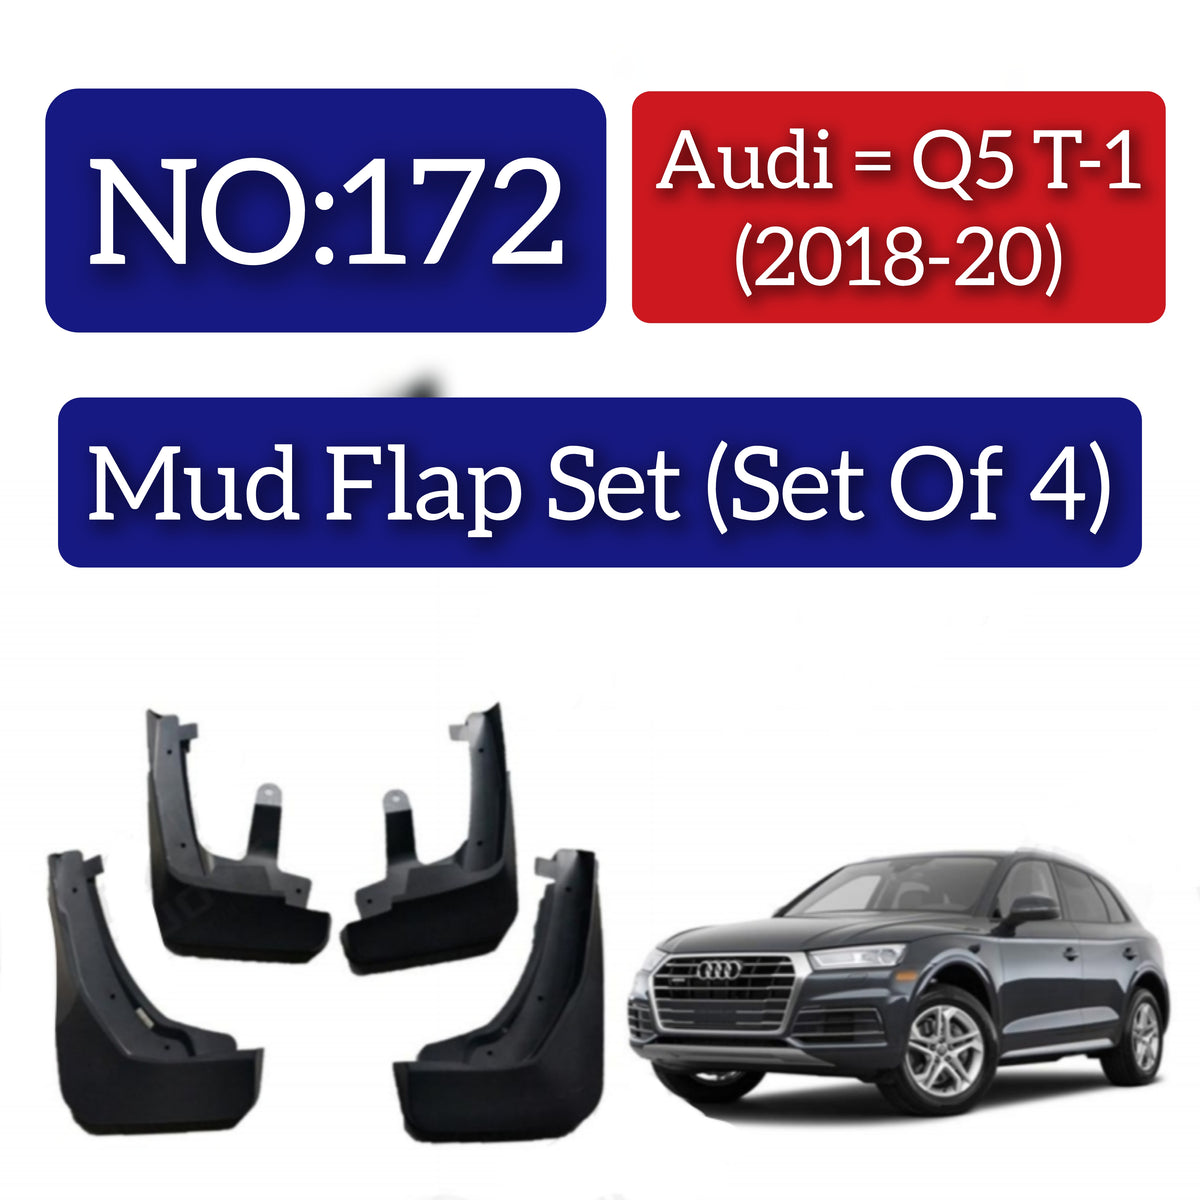 Audi Q5 T-1 (2018-20) Mud Flap Set (Set of 4) Tag 172